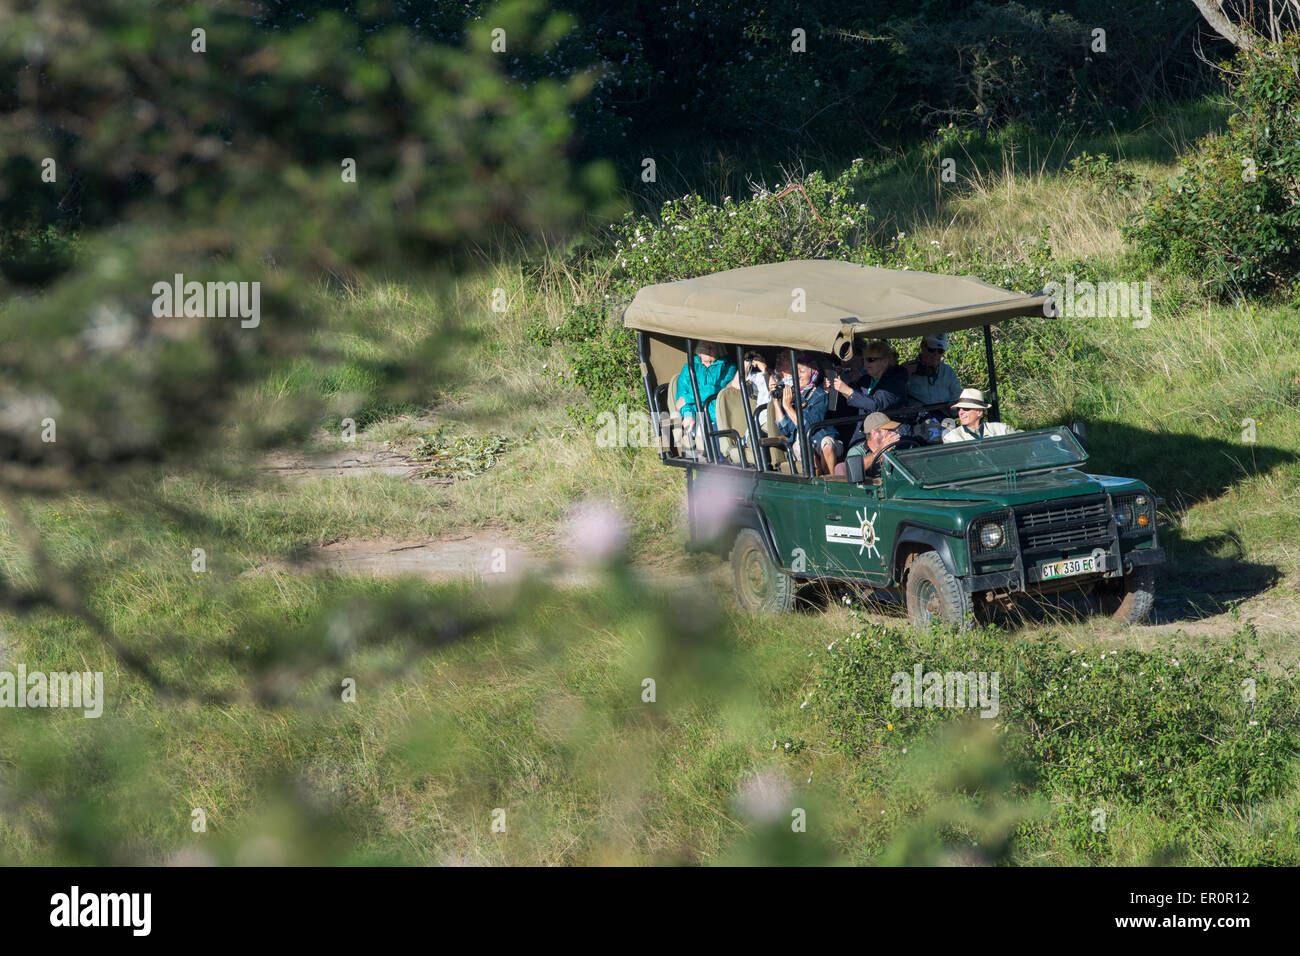 South Africa, Eastern Cape, East London. Inkwenkwezi Game Reserve. Safari jeep on game drive. Stock Photo